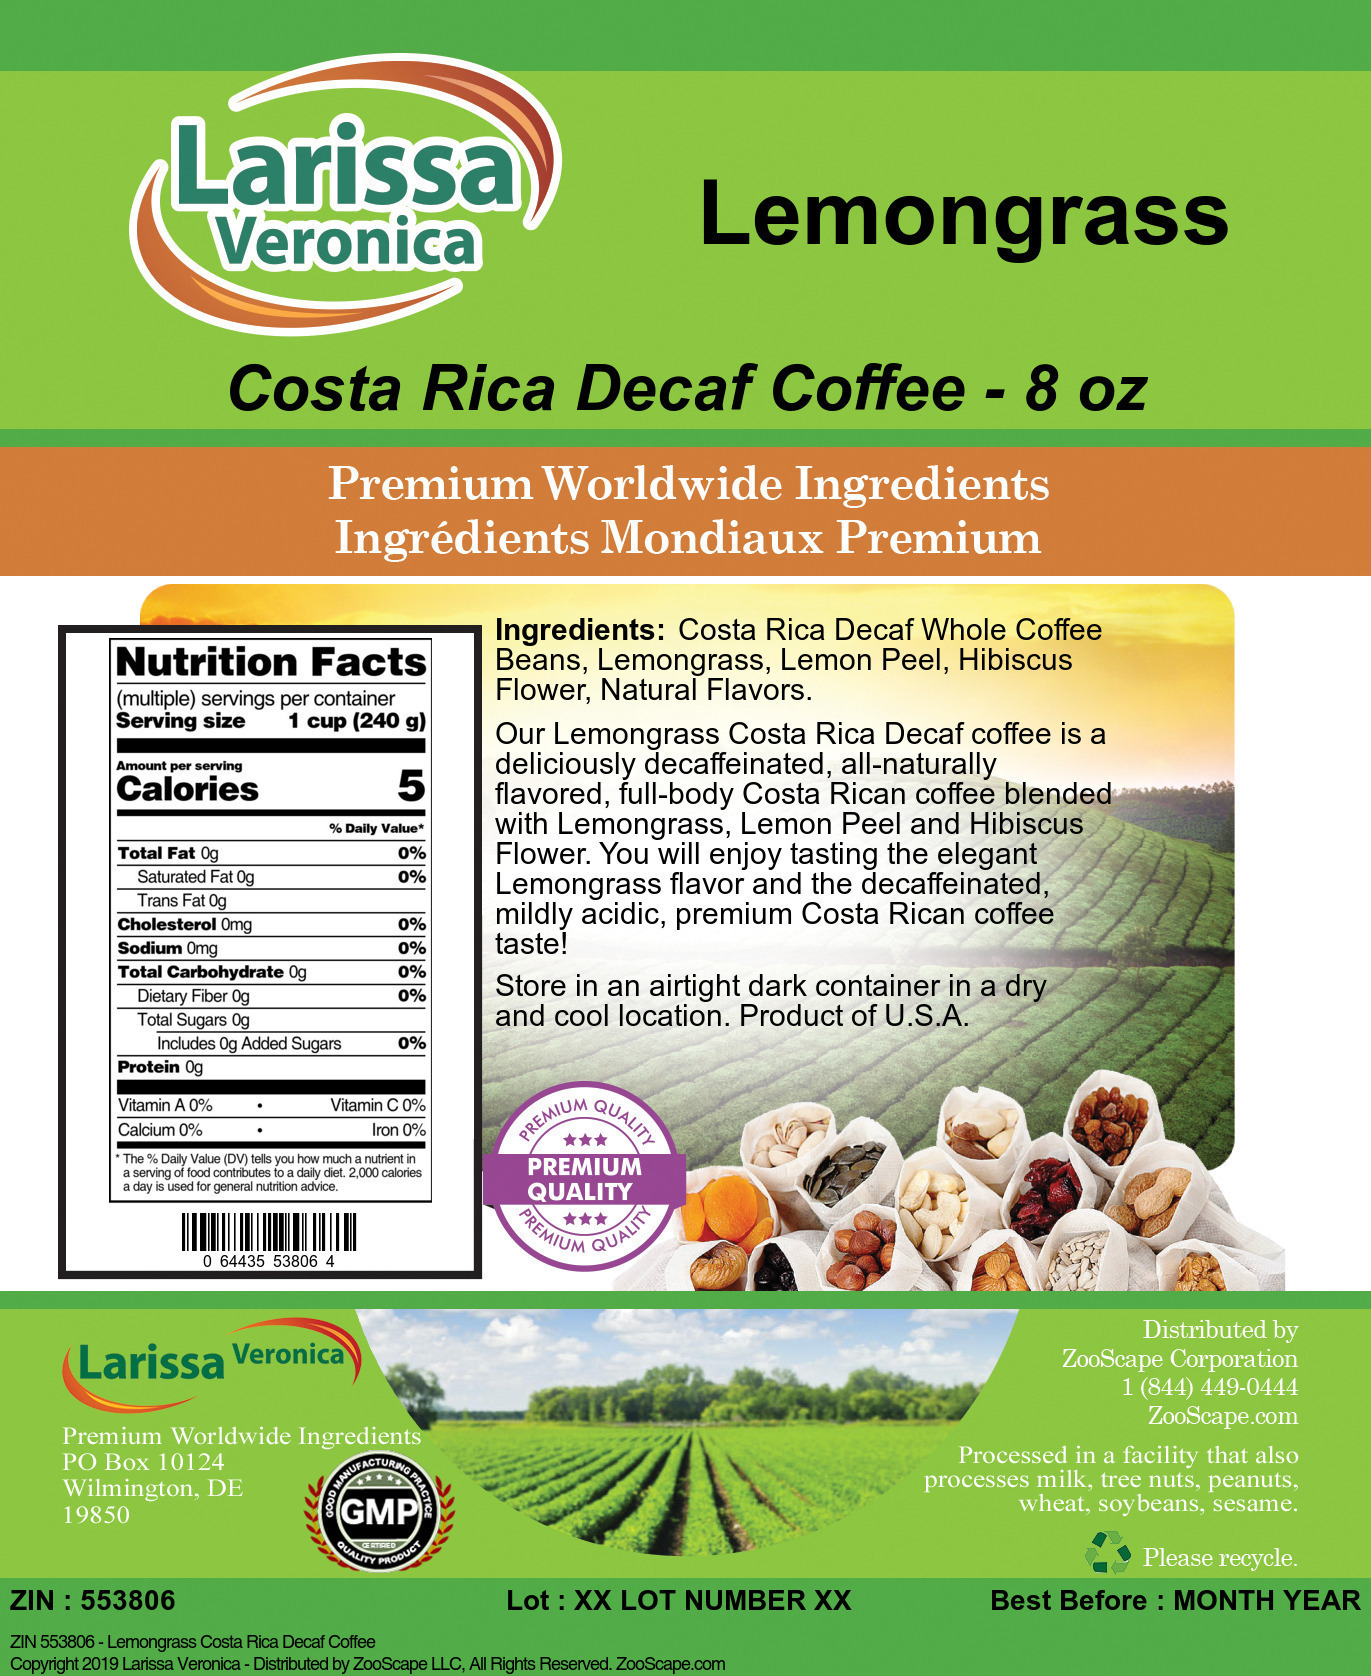 Lemongrass Costa Rica Decaf Coffee - Label